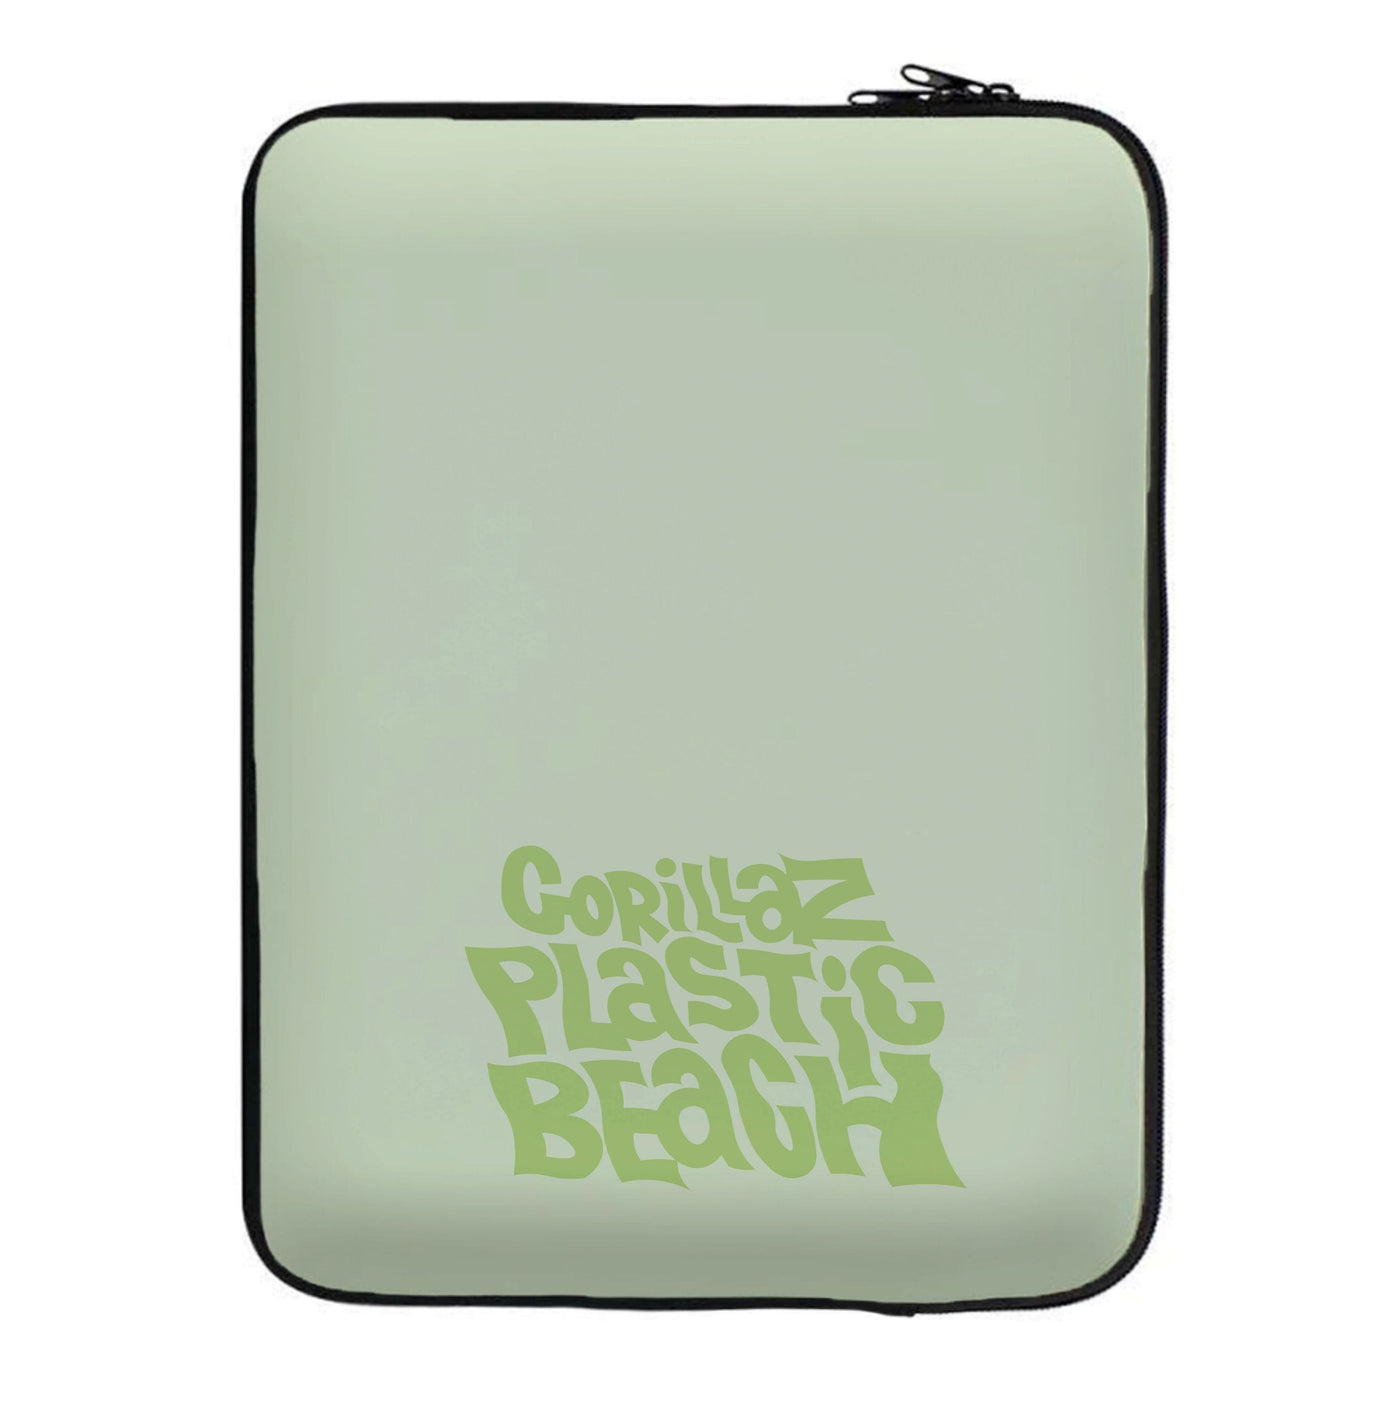 Gorillaz Plastic Beach Laptop Sleeve